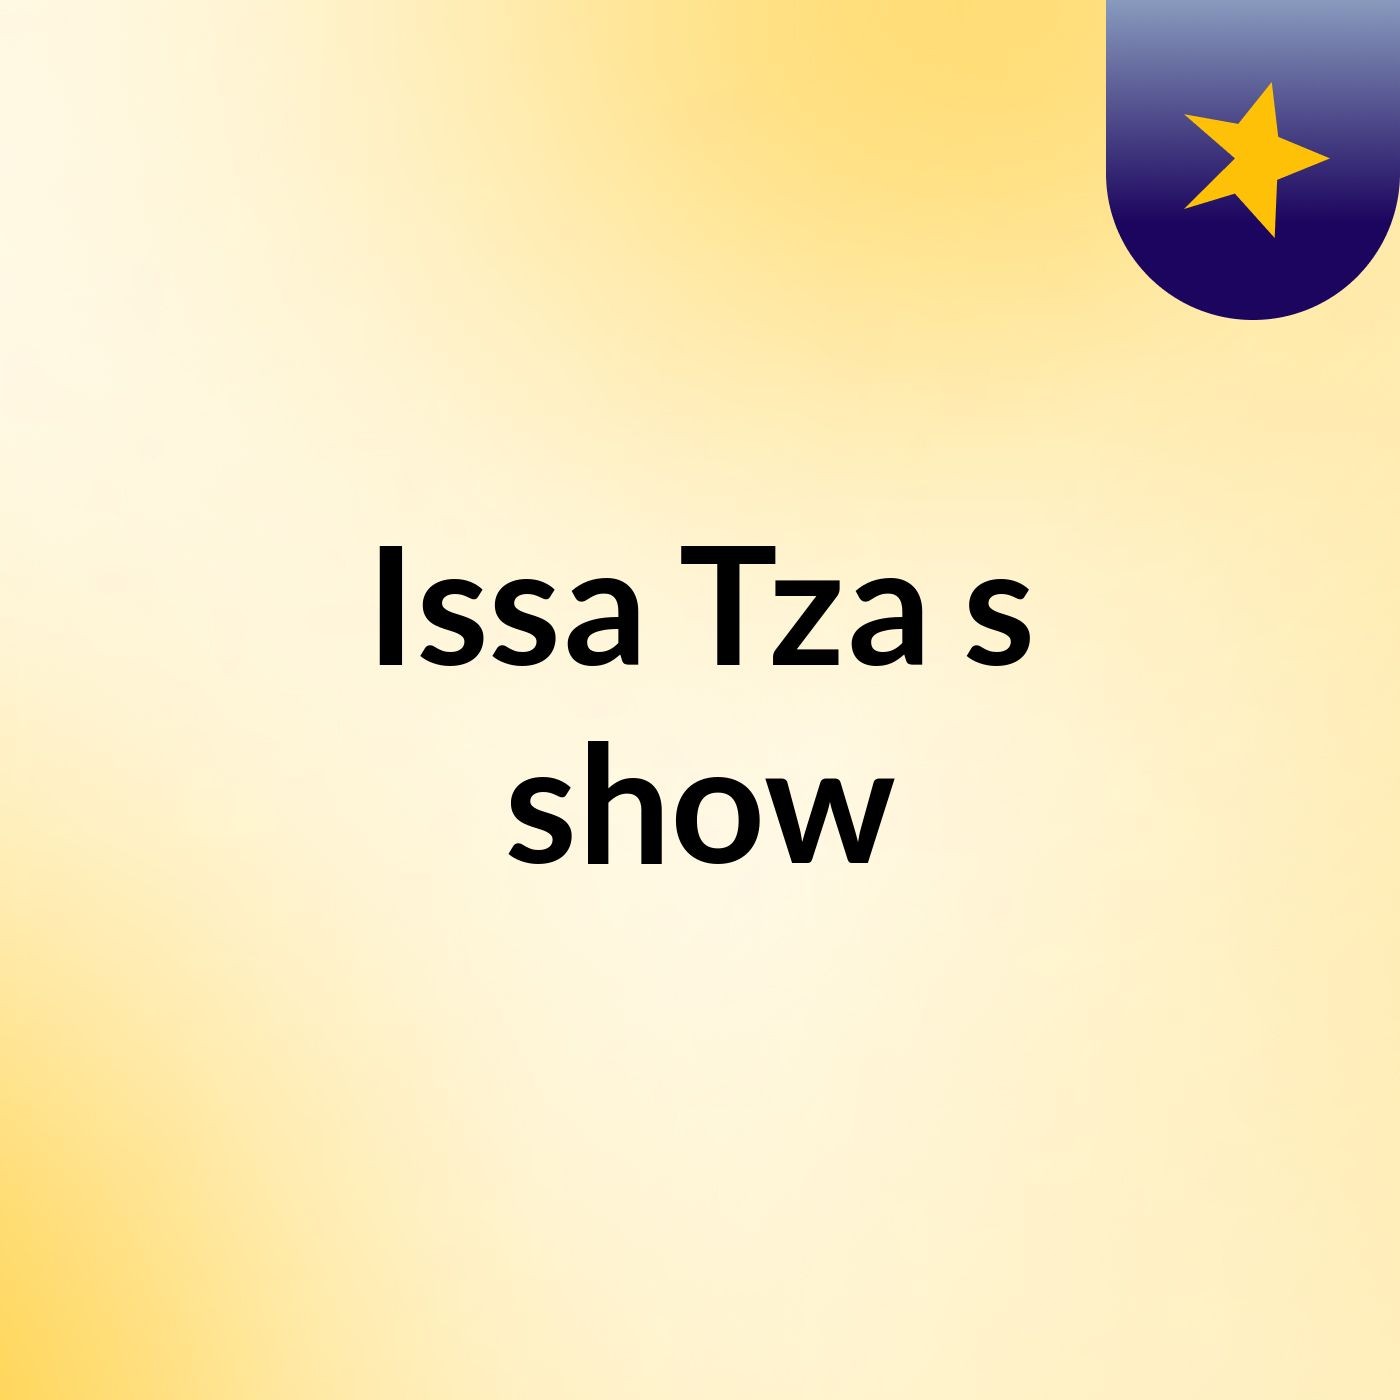 Issa Tza's show